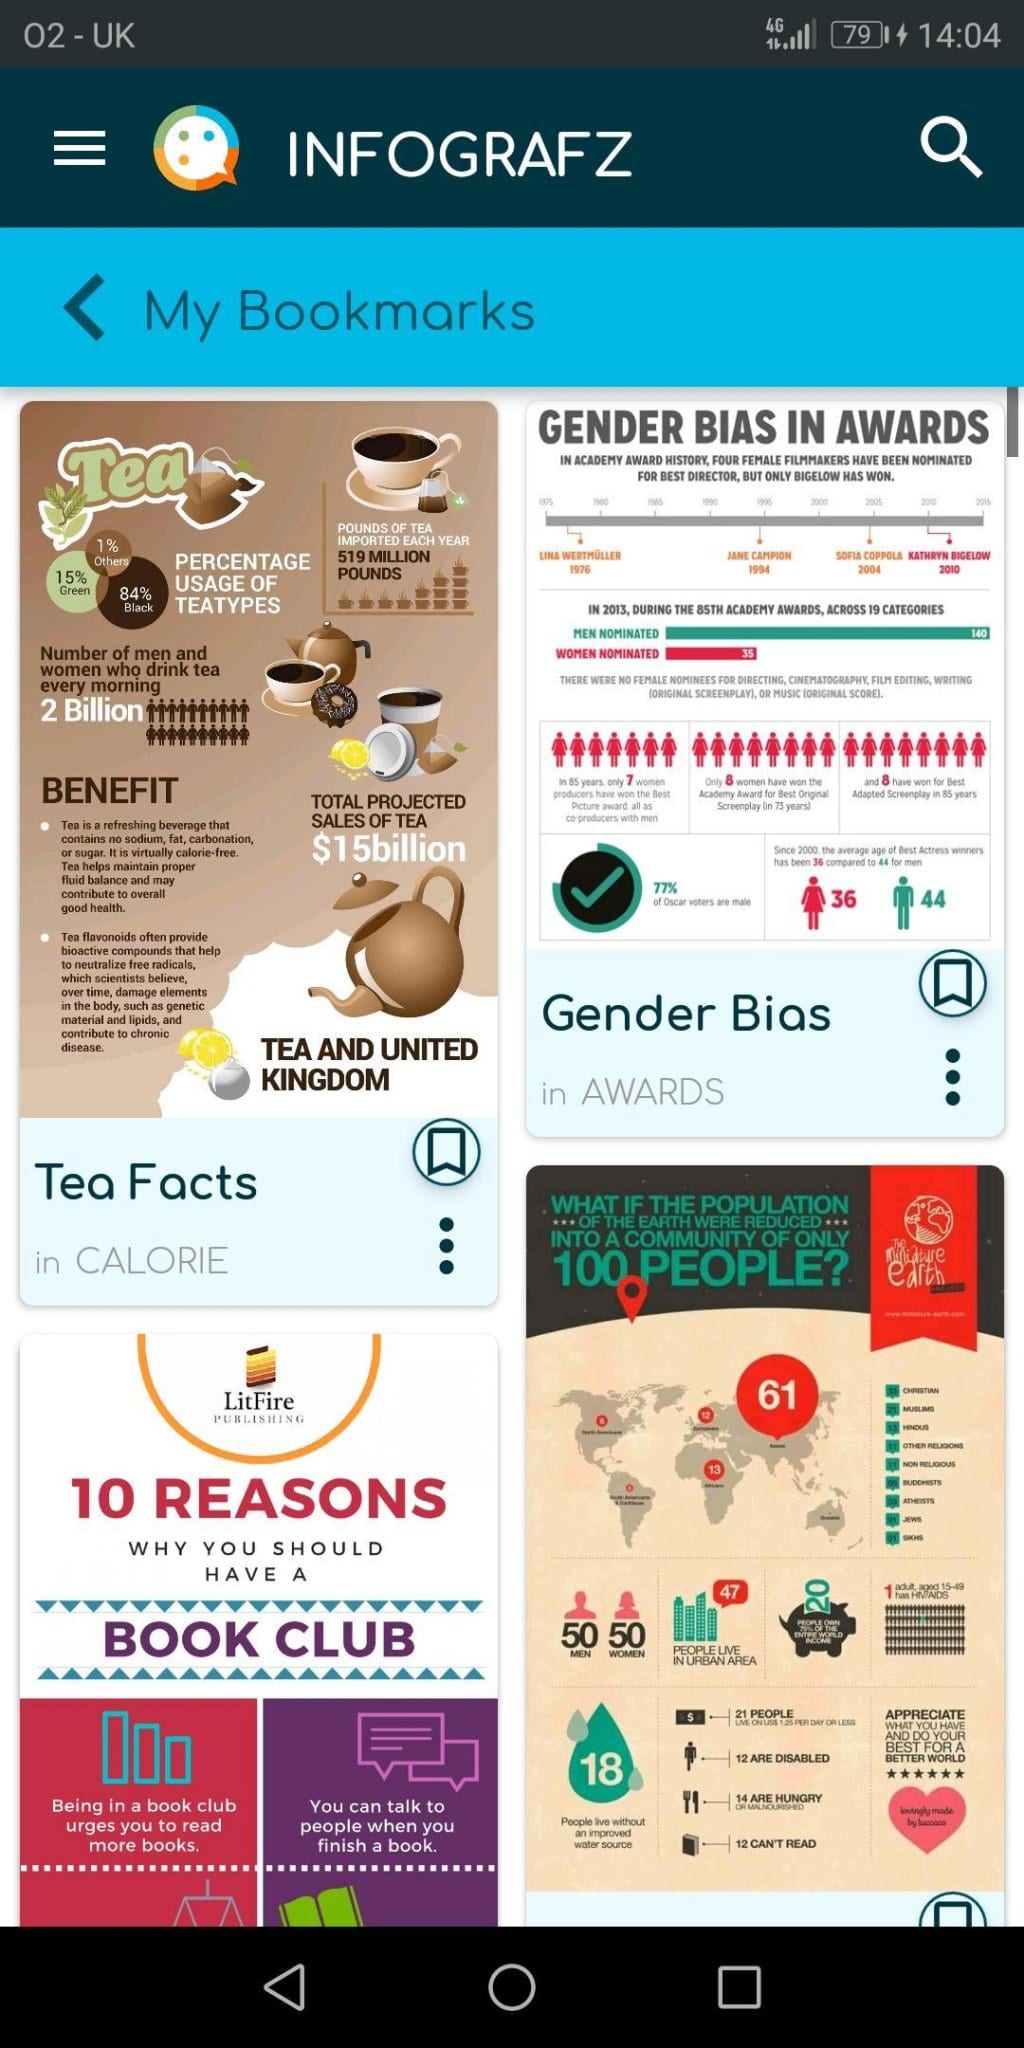 infographic creator apps